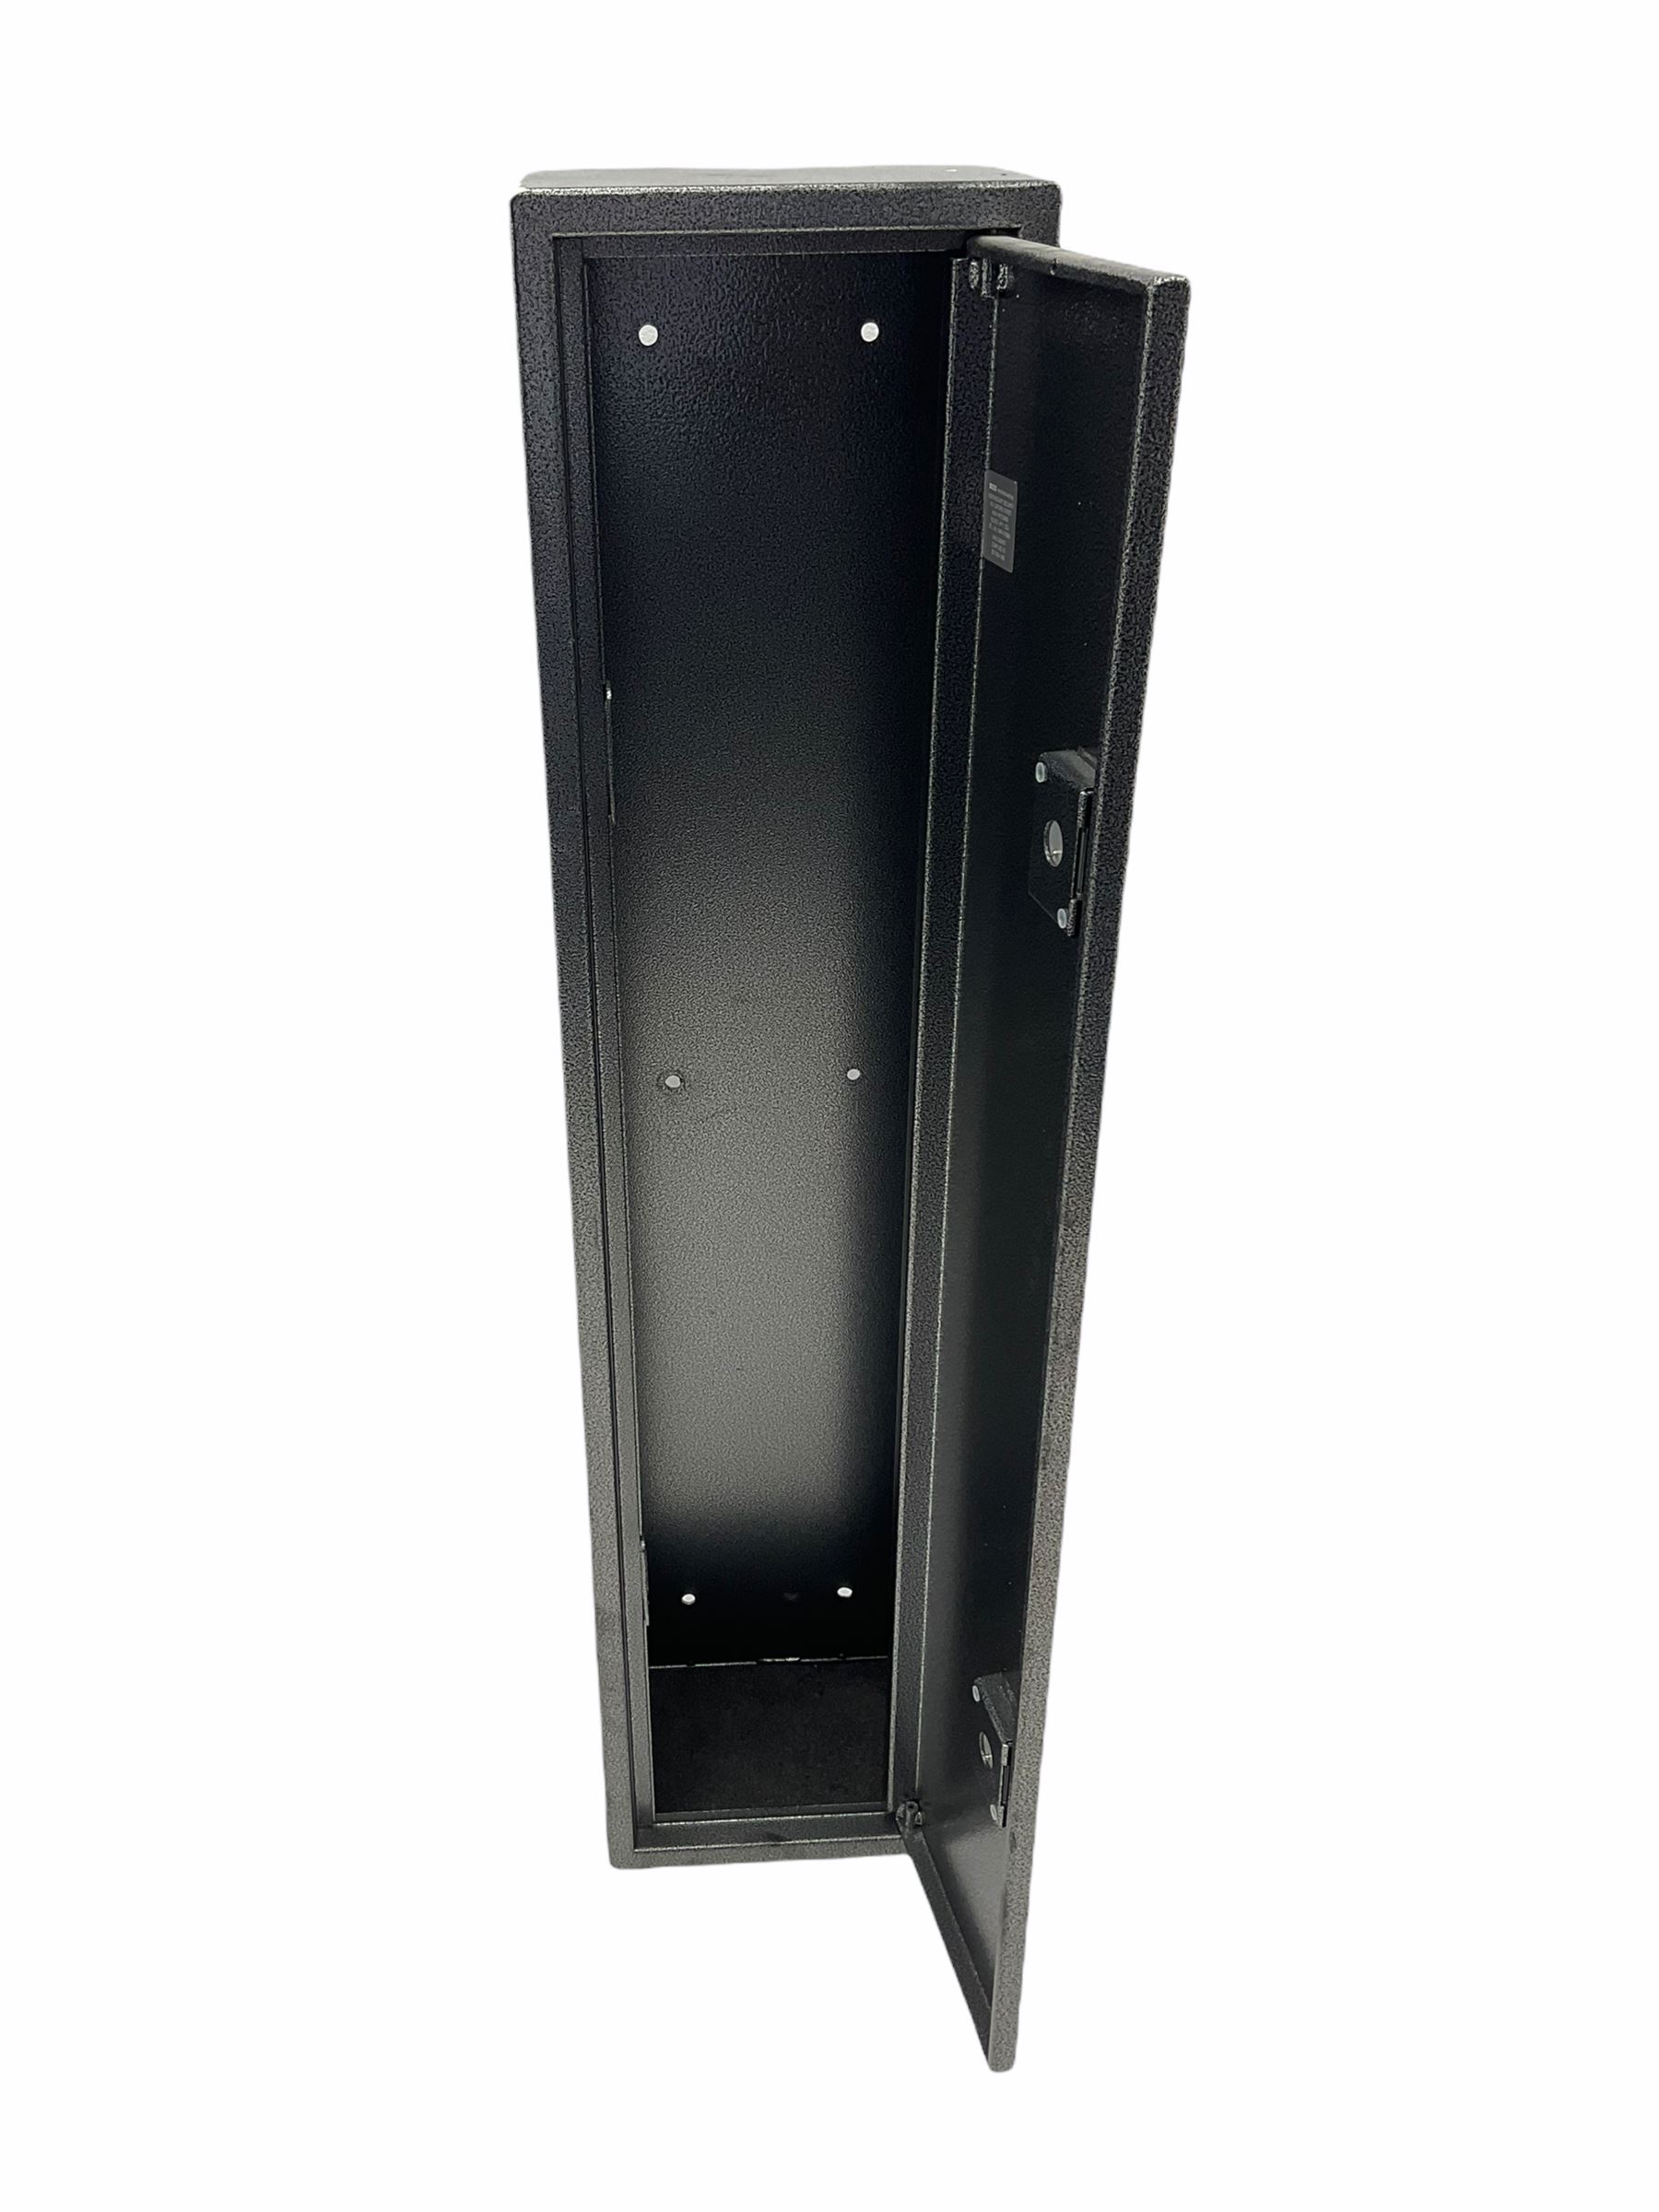 'BOXX' mottled grey steel gun cabinet - Image 2 of 2